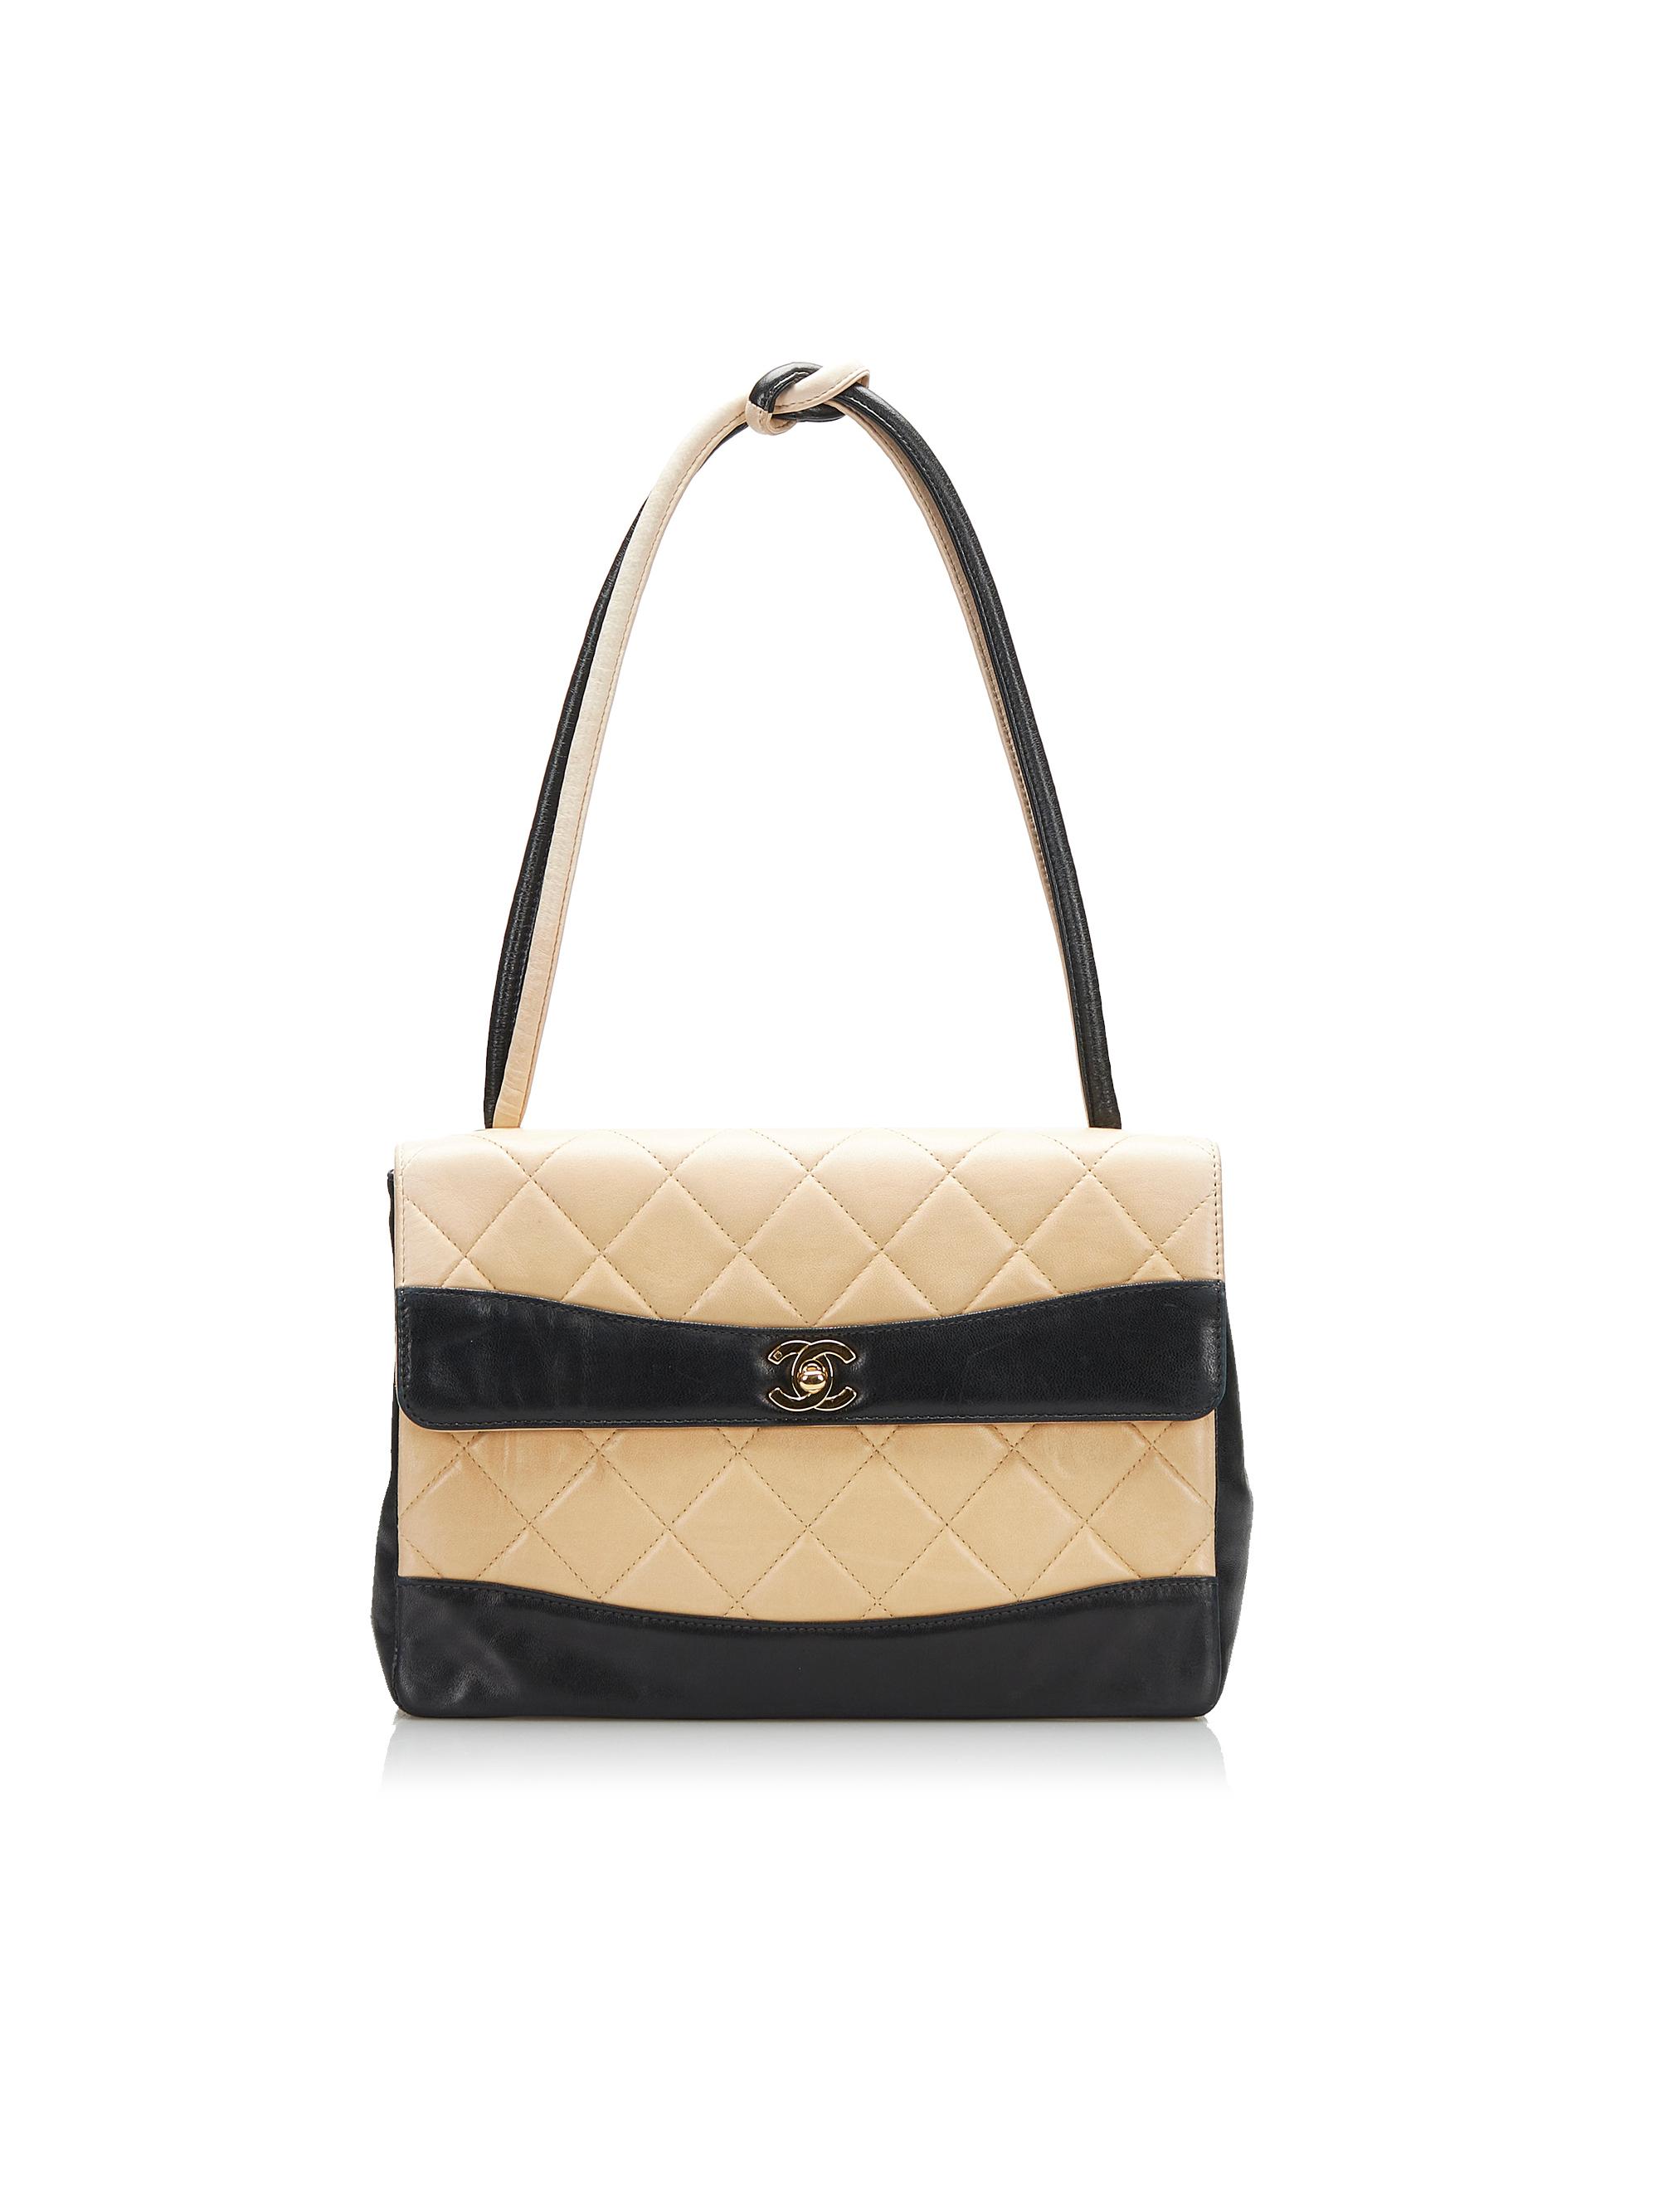 Chanel 100% Leather Brown Bicolor Leather Shoulder Bag One Size